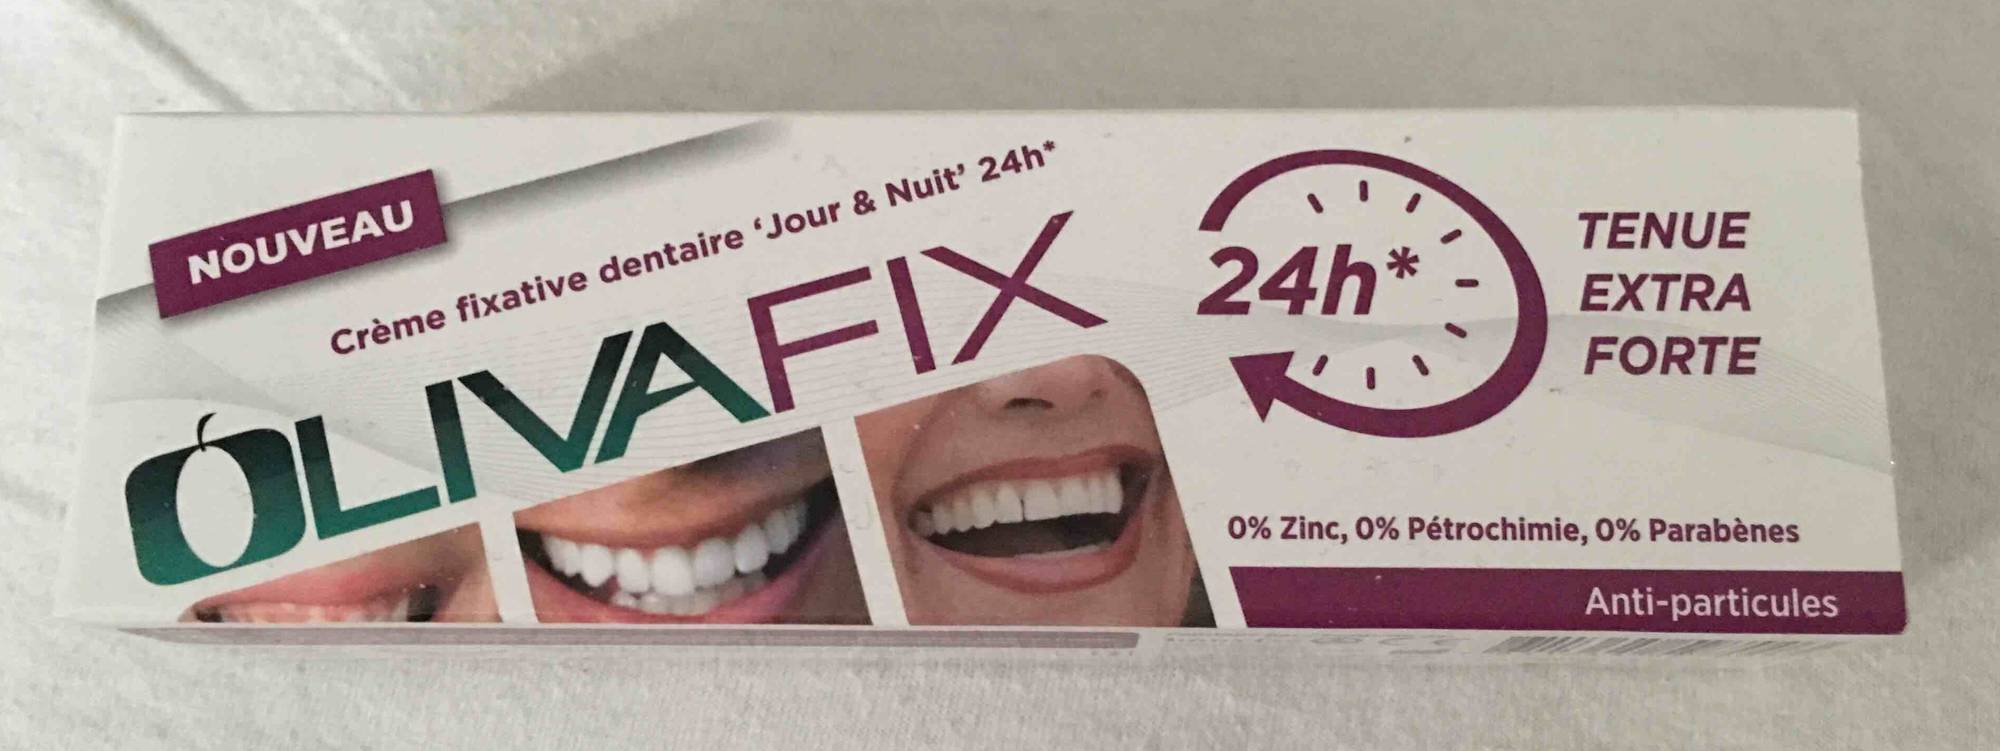 OLIVAFIX - Crème fixative dentaire